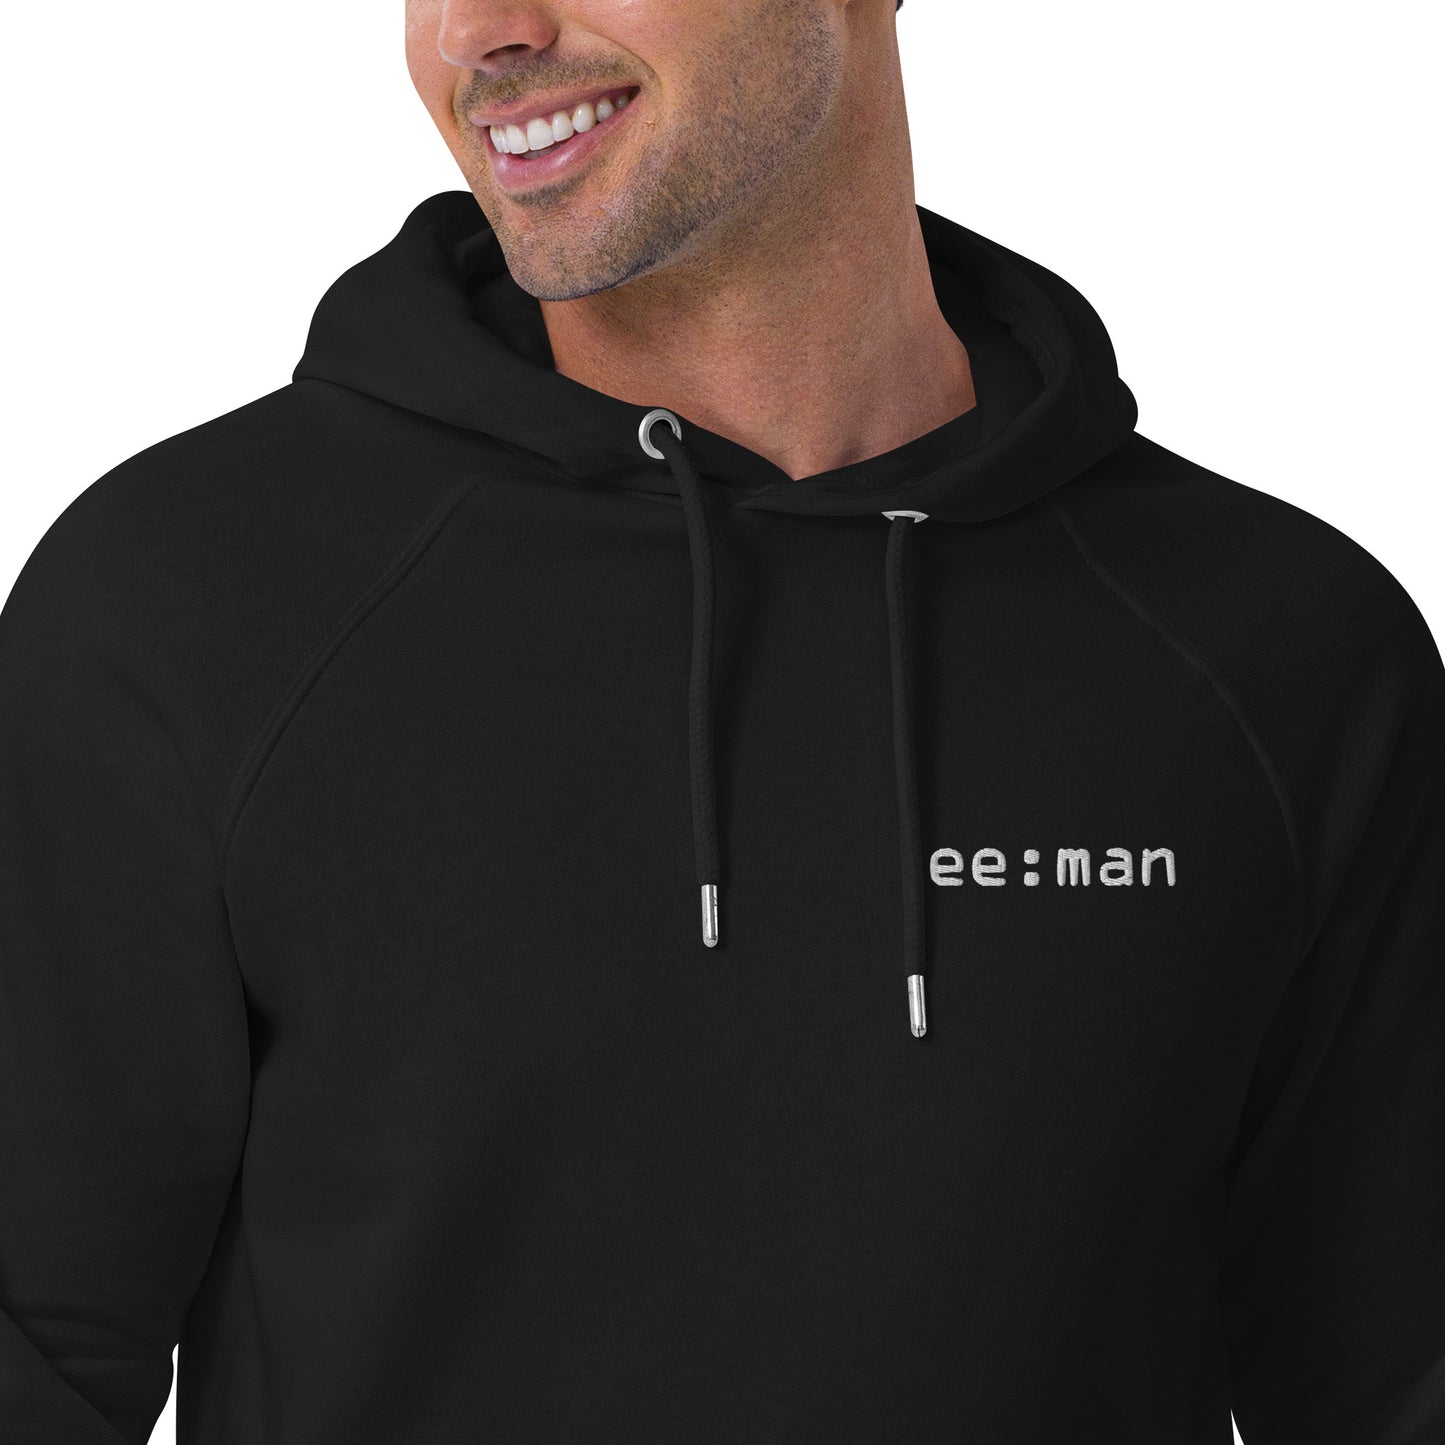 ee:man, official logo (embroidery), Unisex eco raglan hoodie